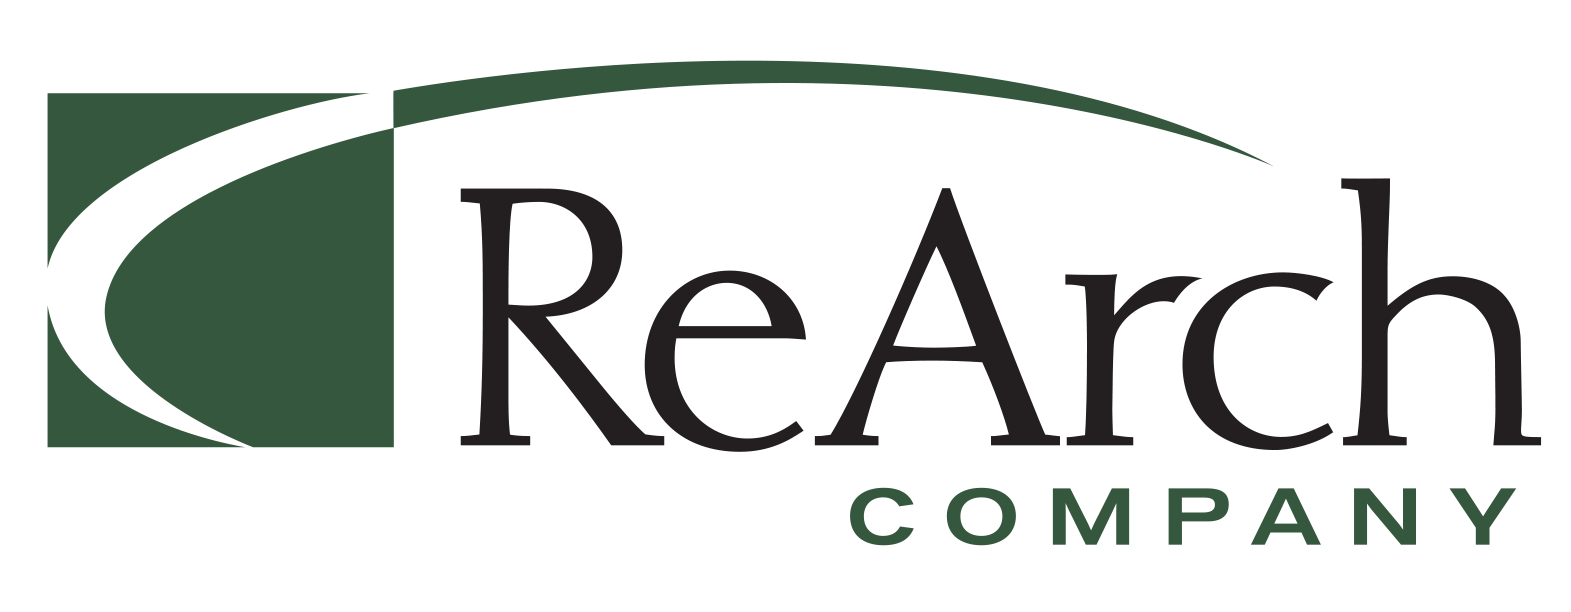 ReArch Company